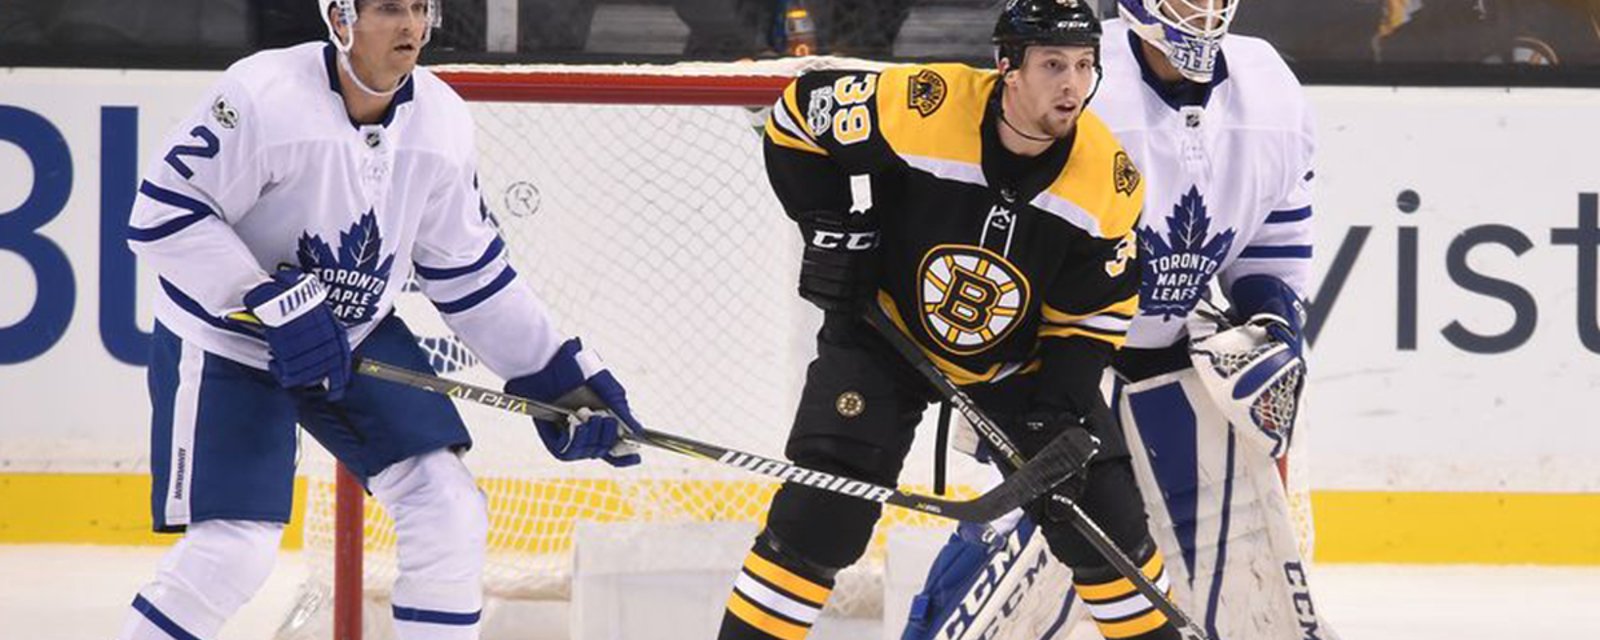 Breaking: Bruins place Windsor native Matt Beleskey on waivers